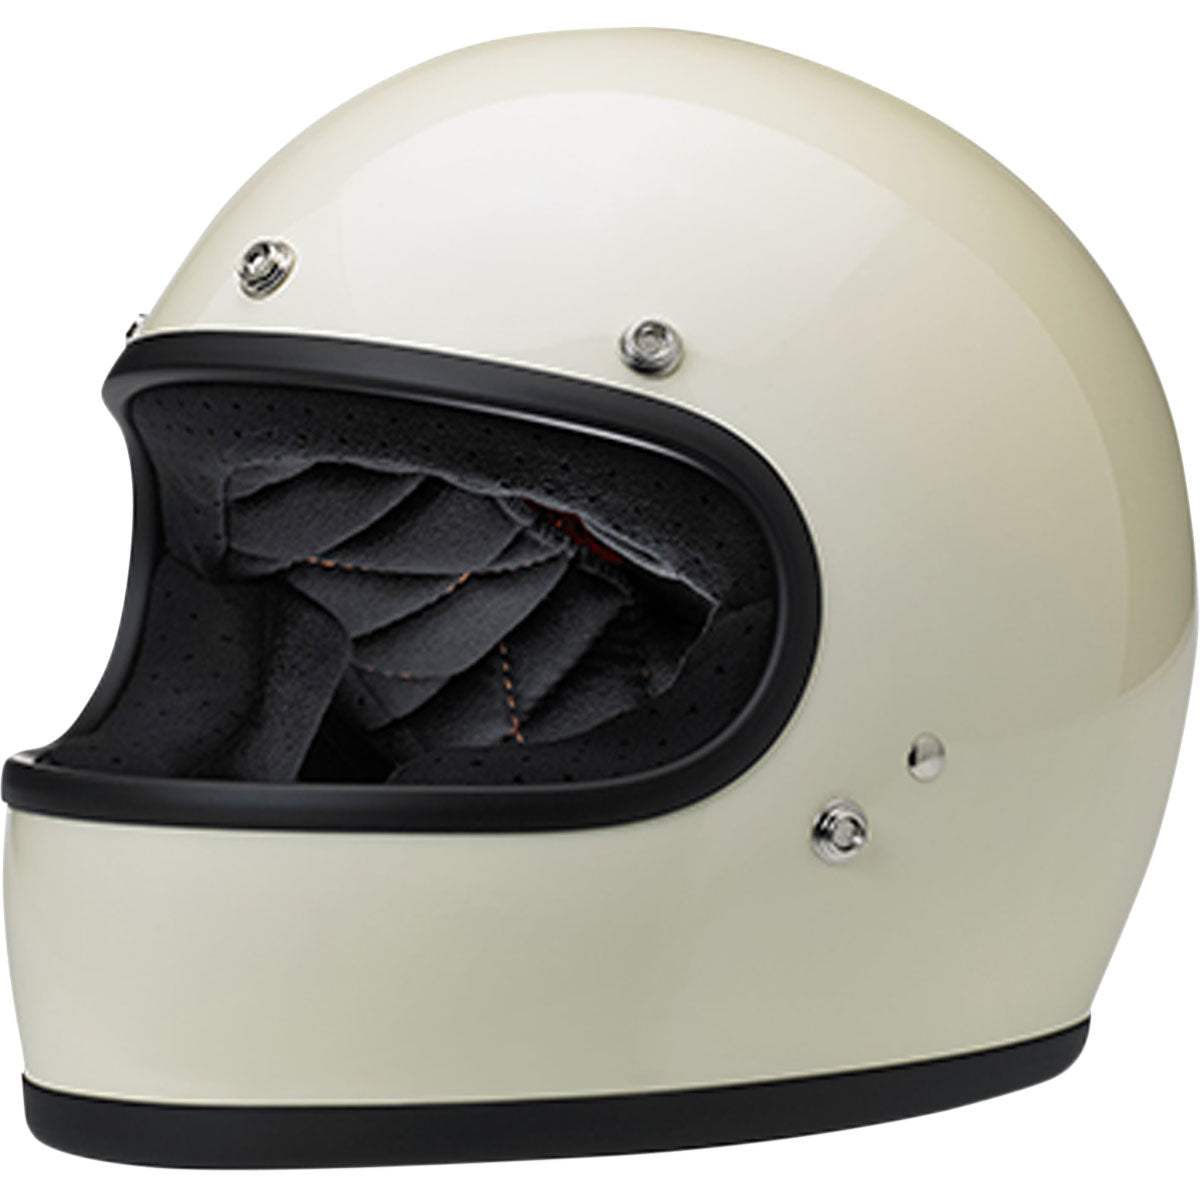 Biltwell Gringo Helmet CLOSEOUT - Gloss Vintage White